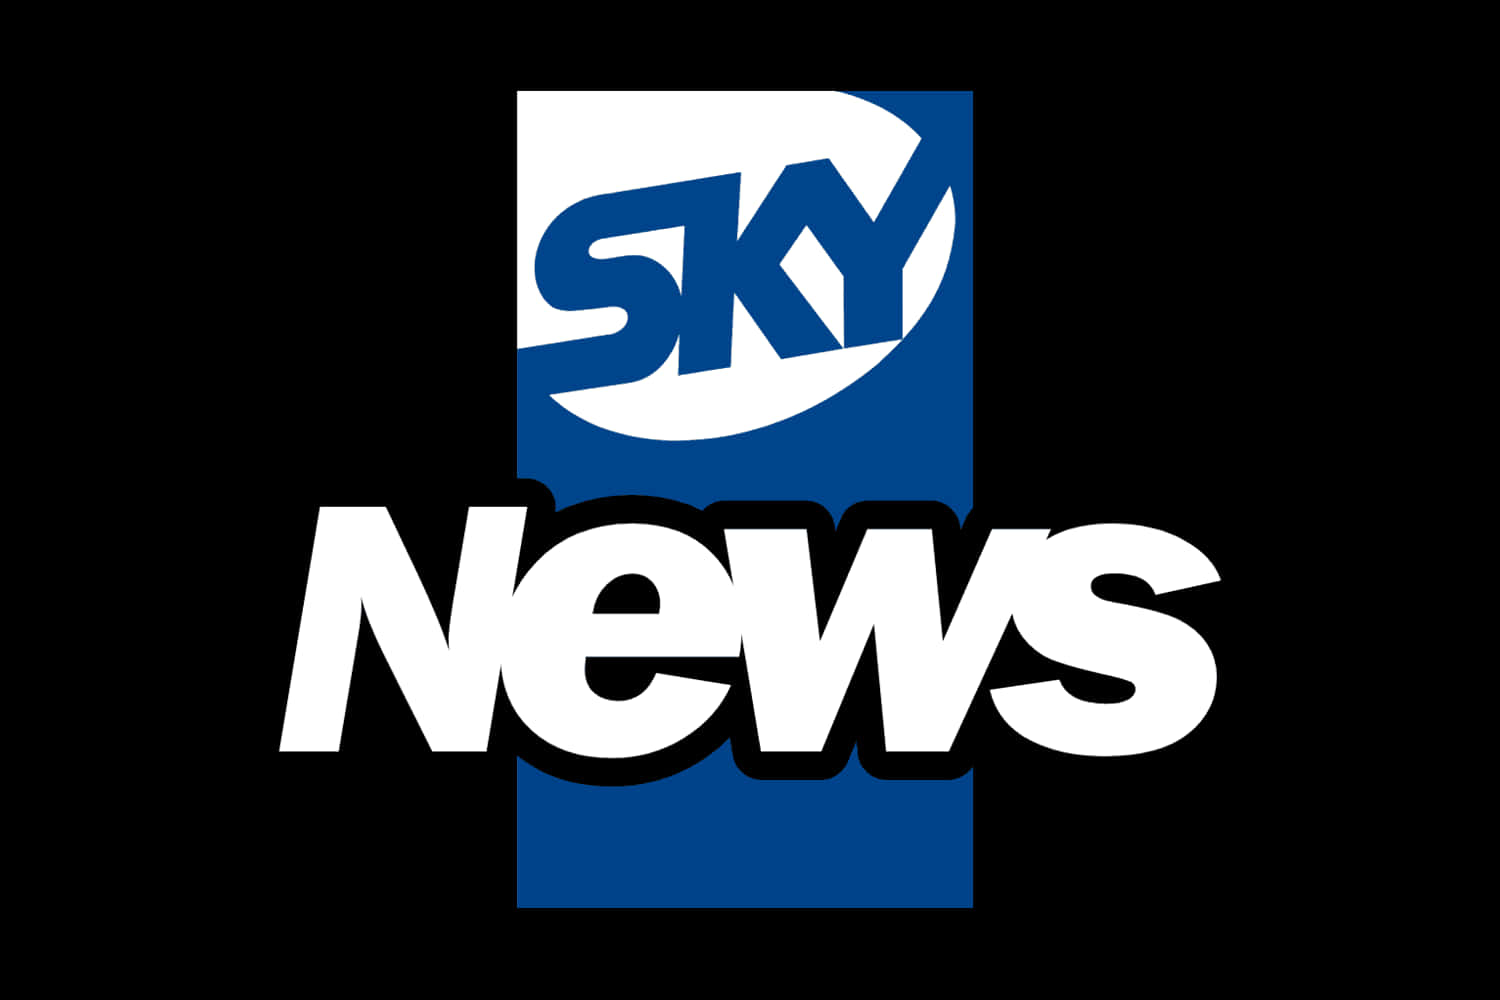 Sky News Blue Logo Wallpaper